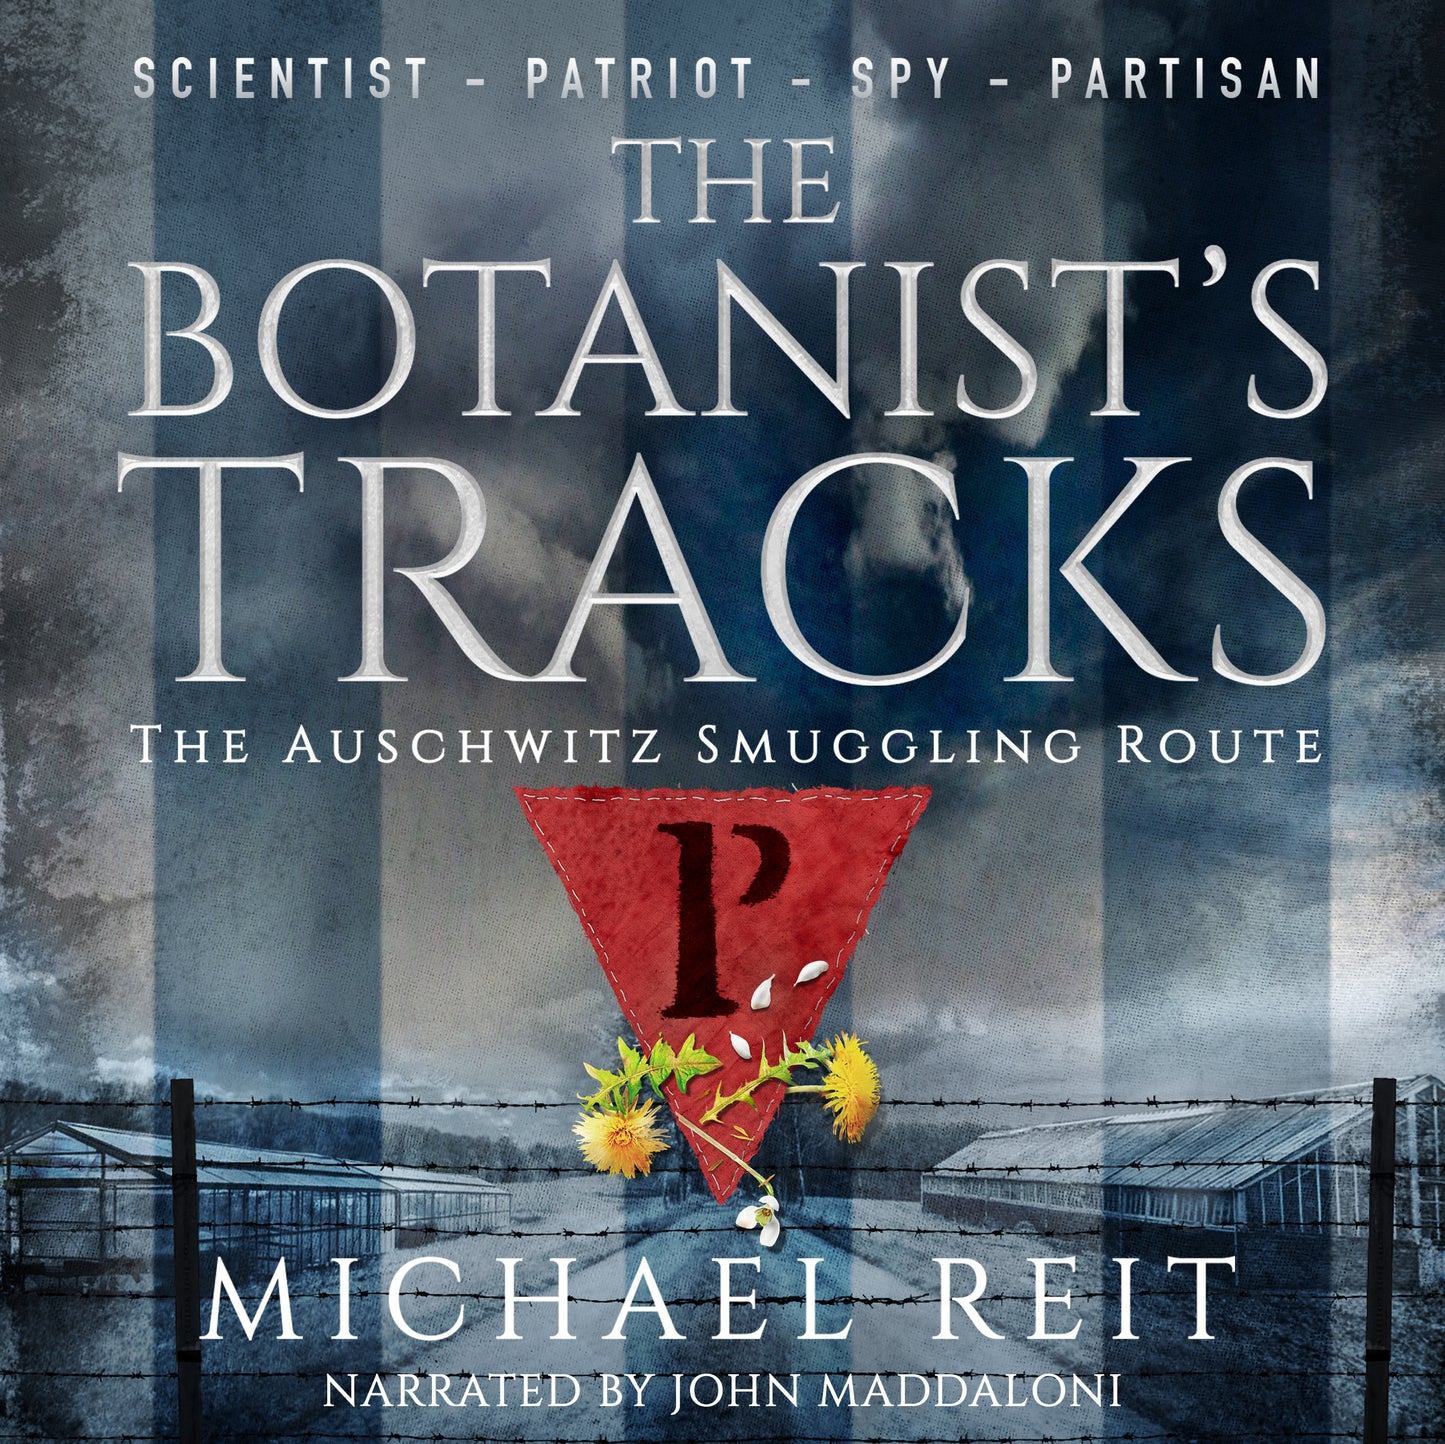 Beyond the Tracks audiobook bundle